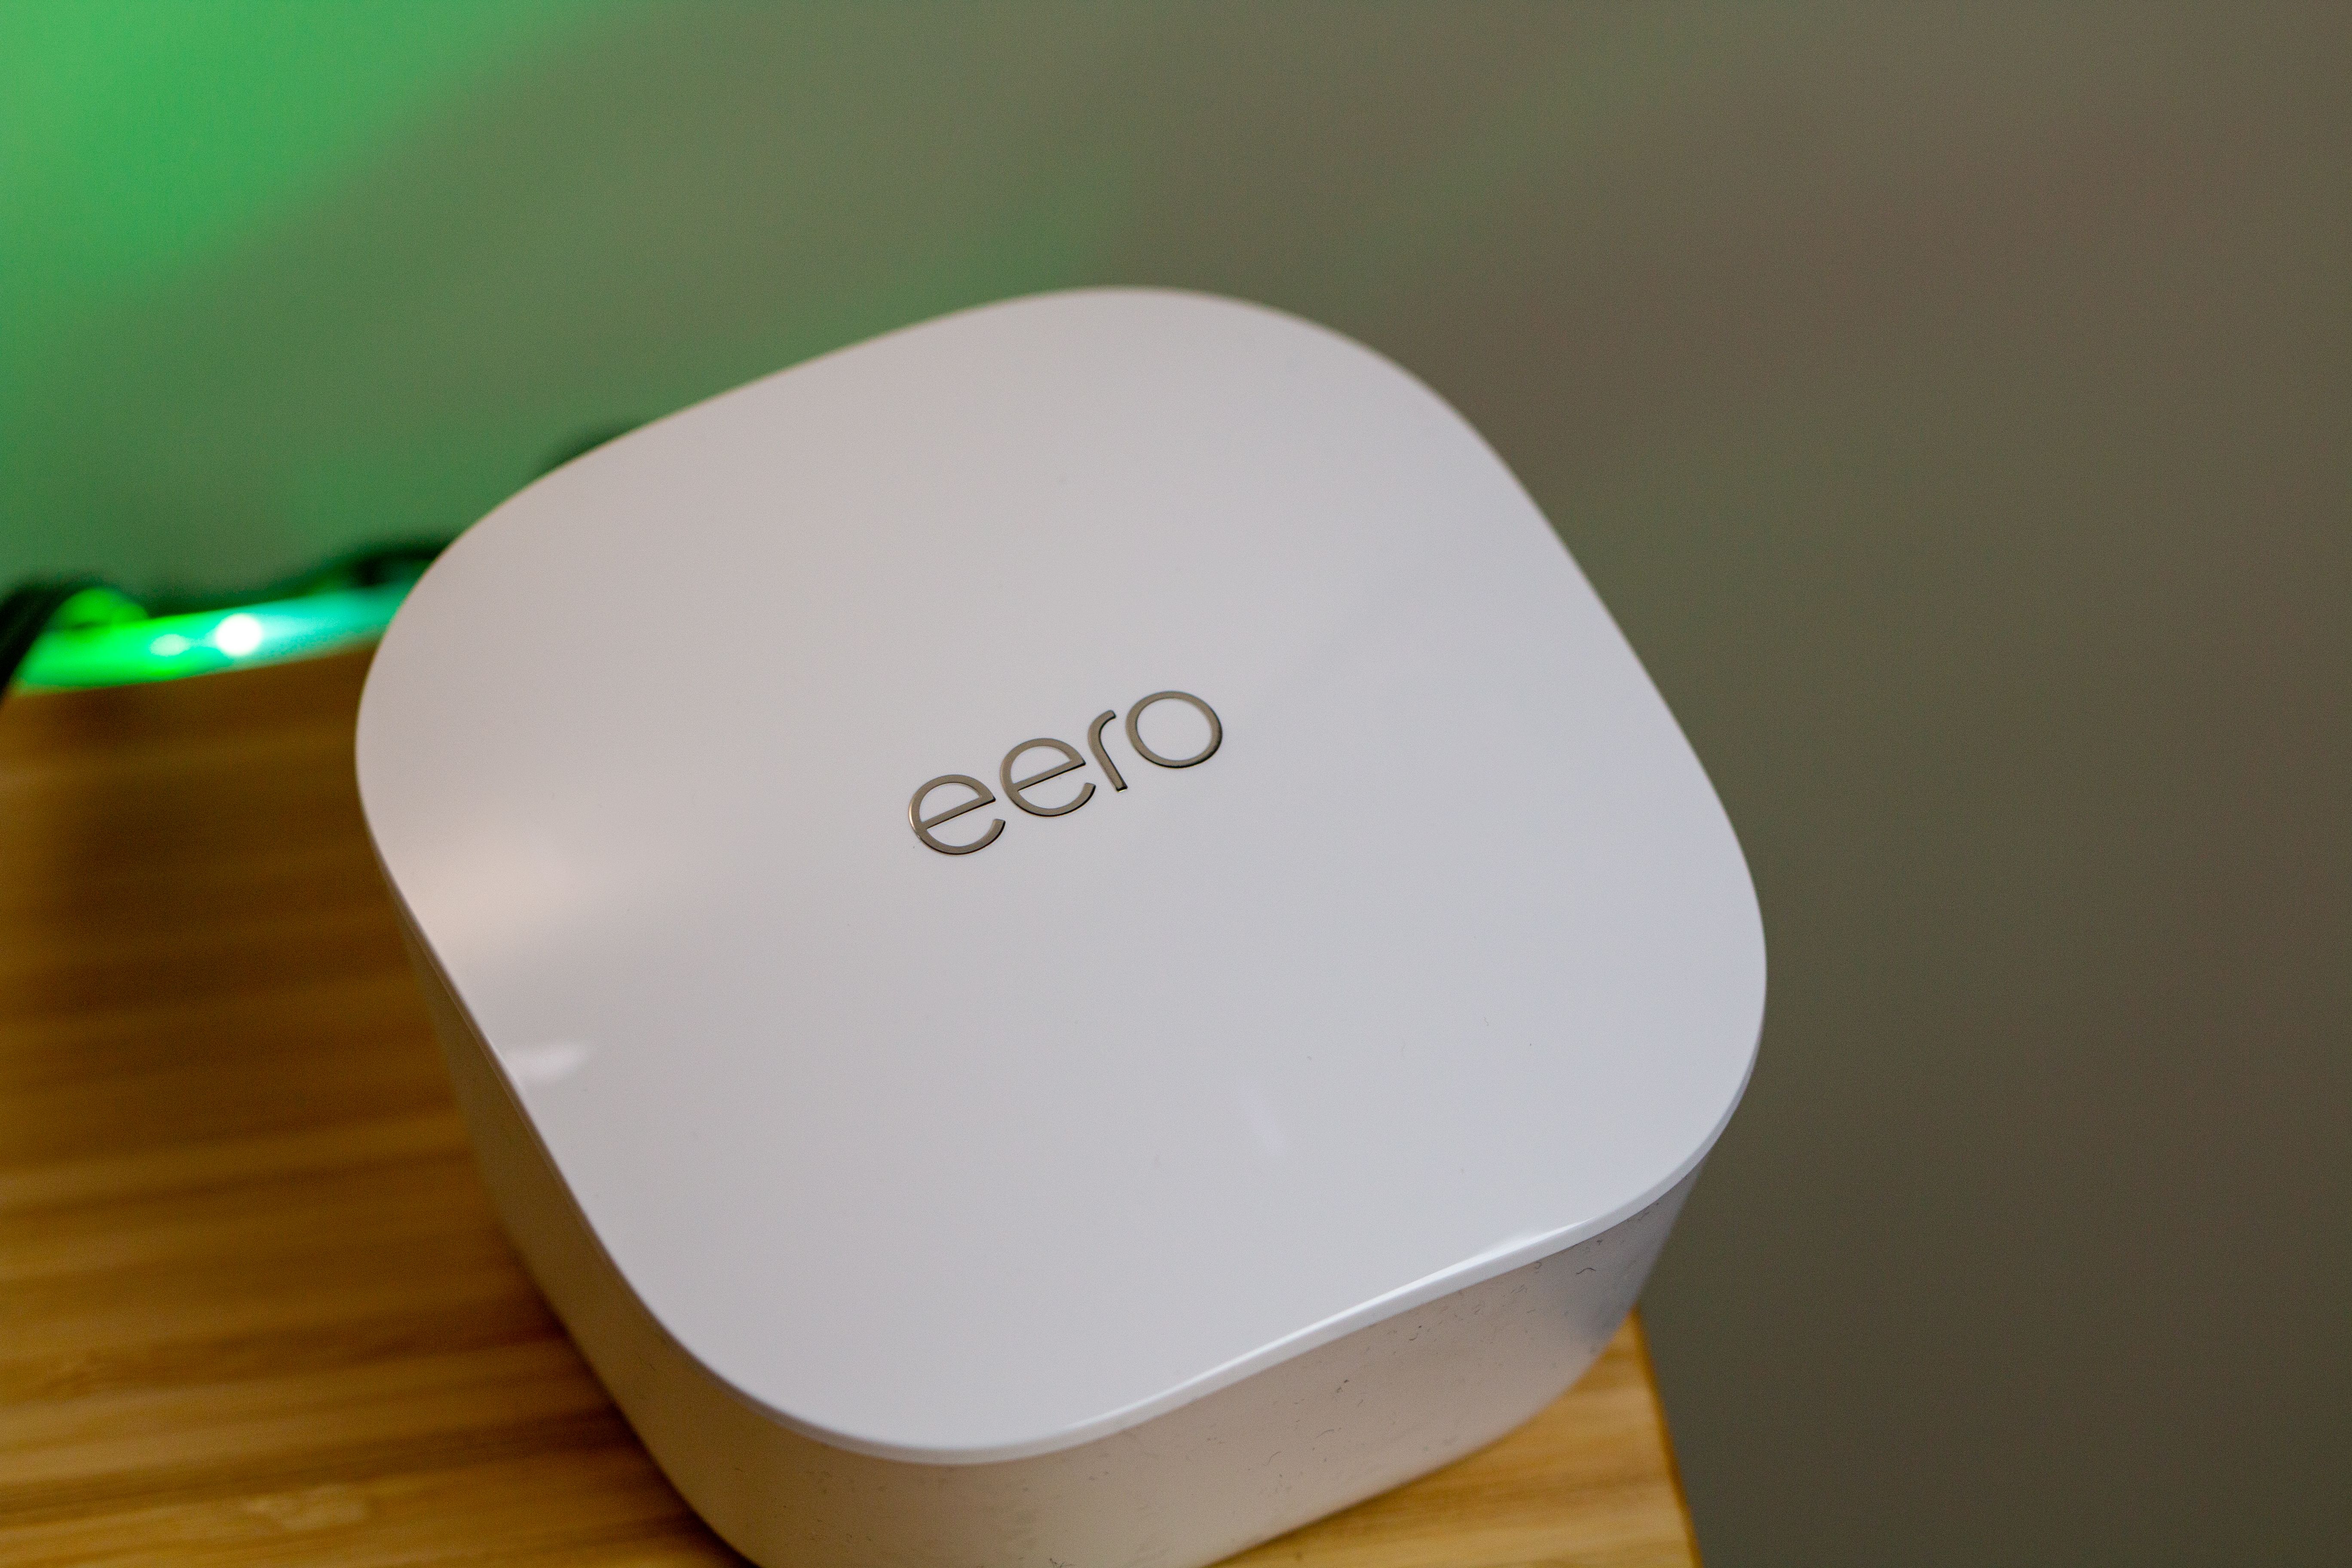 Eero-Satellite-Router